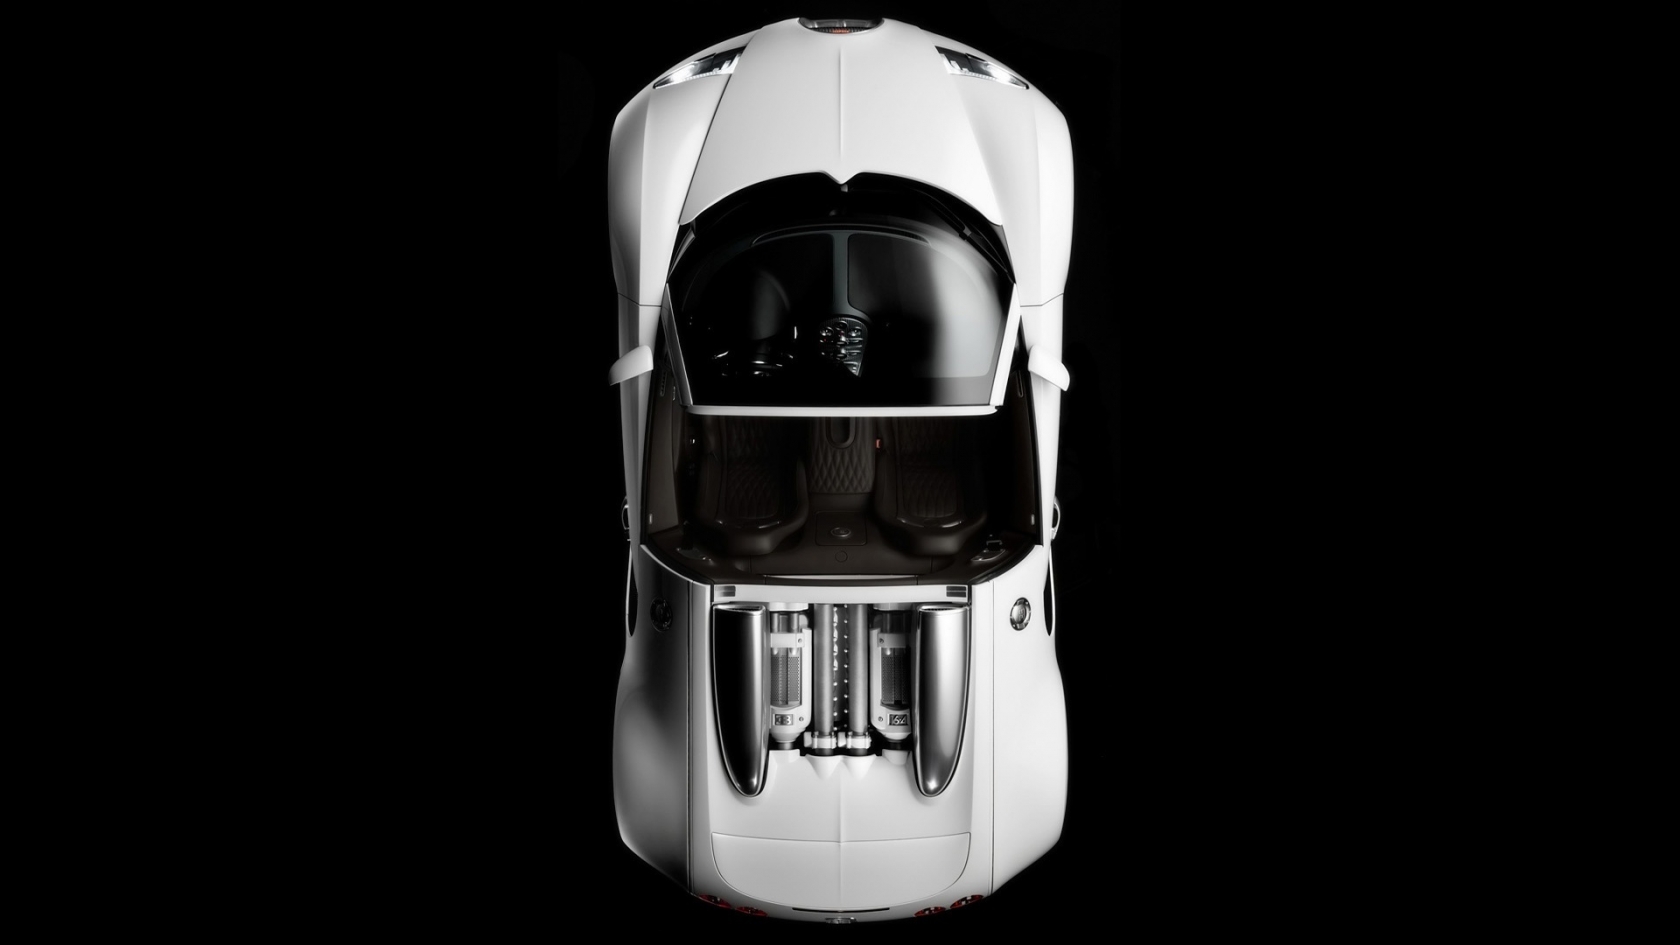 Bugatti Veyron 16.4 Grand Sport Production Version 2009 - Studio Top for 1680 x 945 HDTV resolution